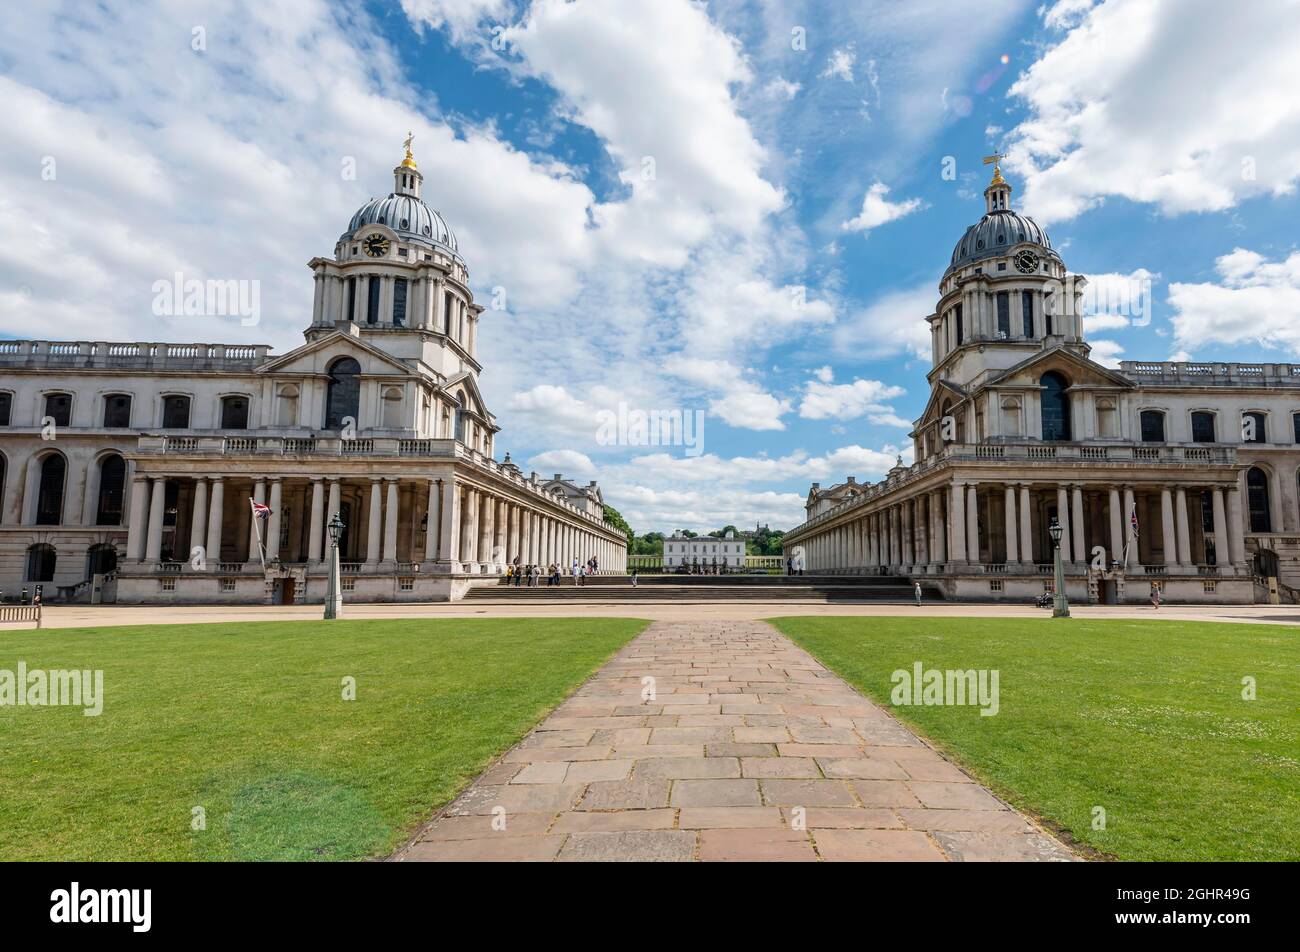 Old Royal Naval College, Greenwich, Londres, région de Londres, Angleterre, Royaume-Uni Banque D'Images